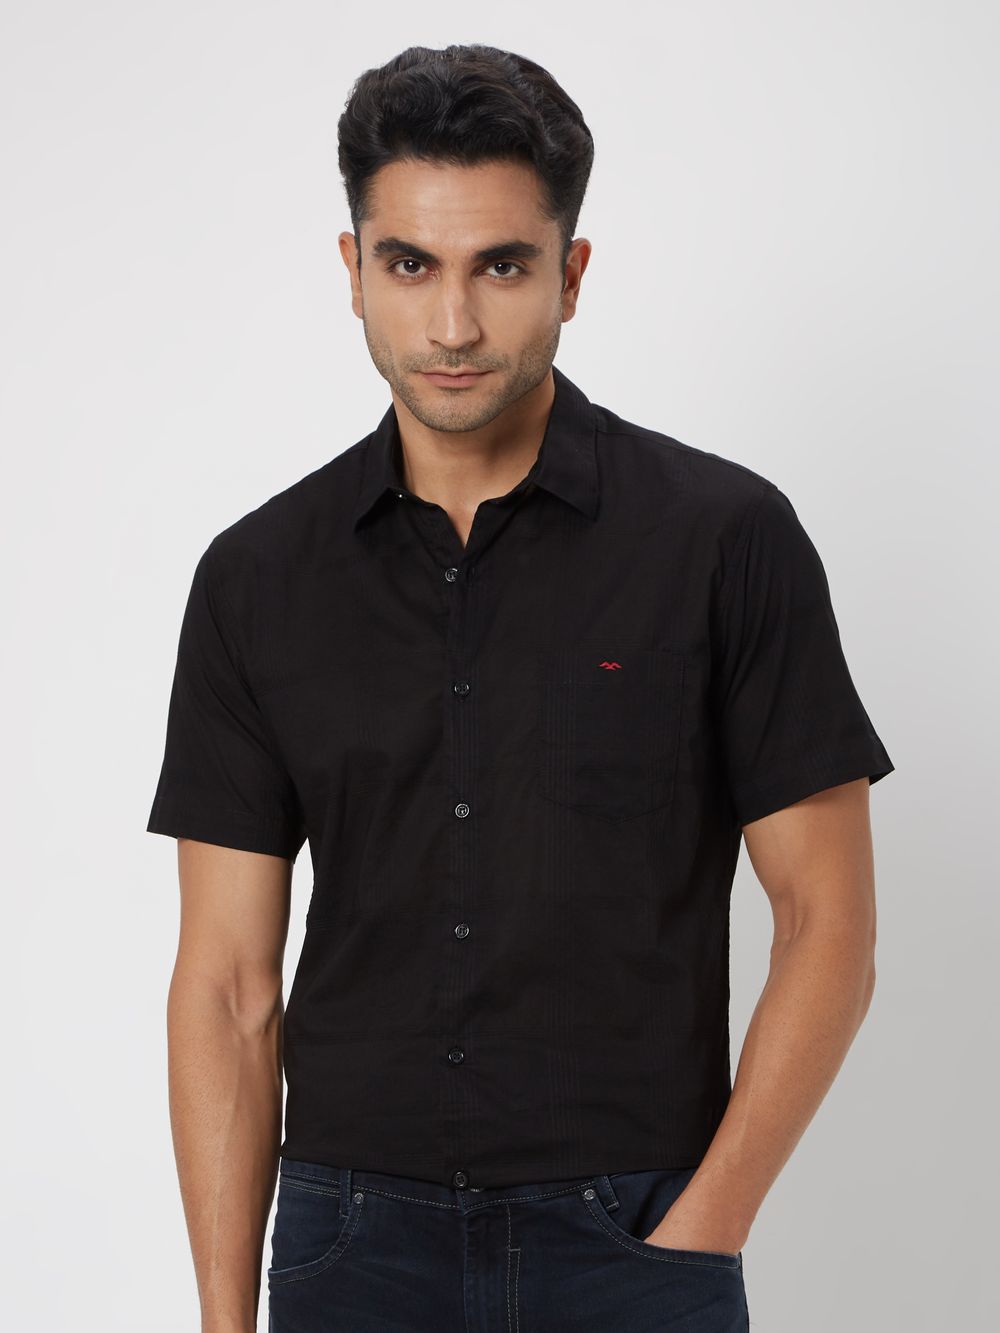 Black Textured Plain Shirt